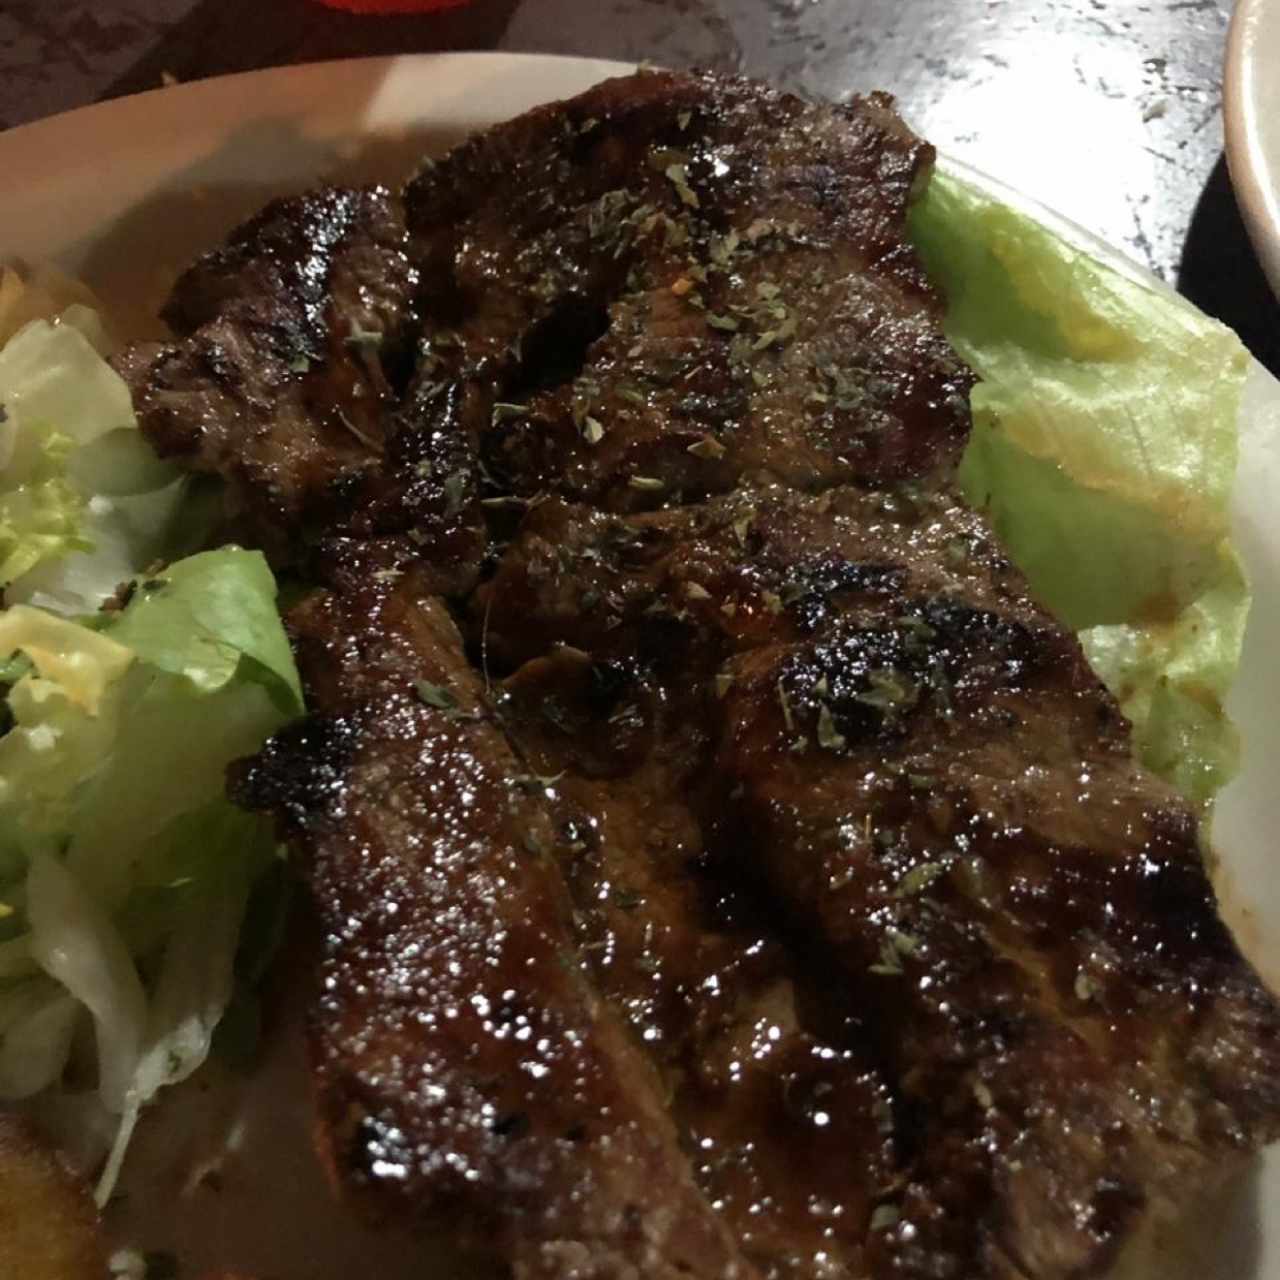 Steak! 😍